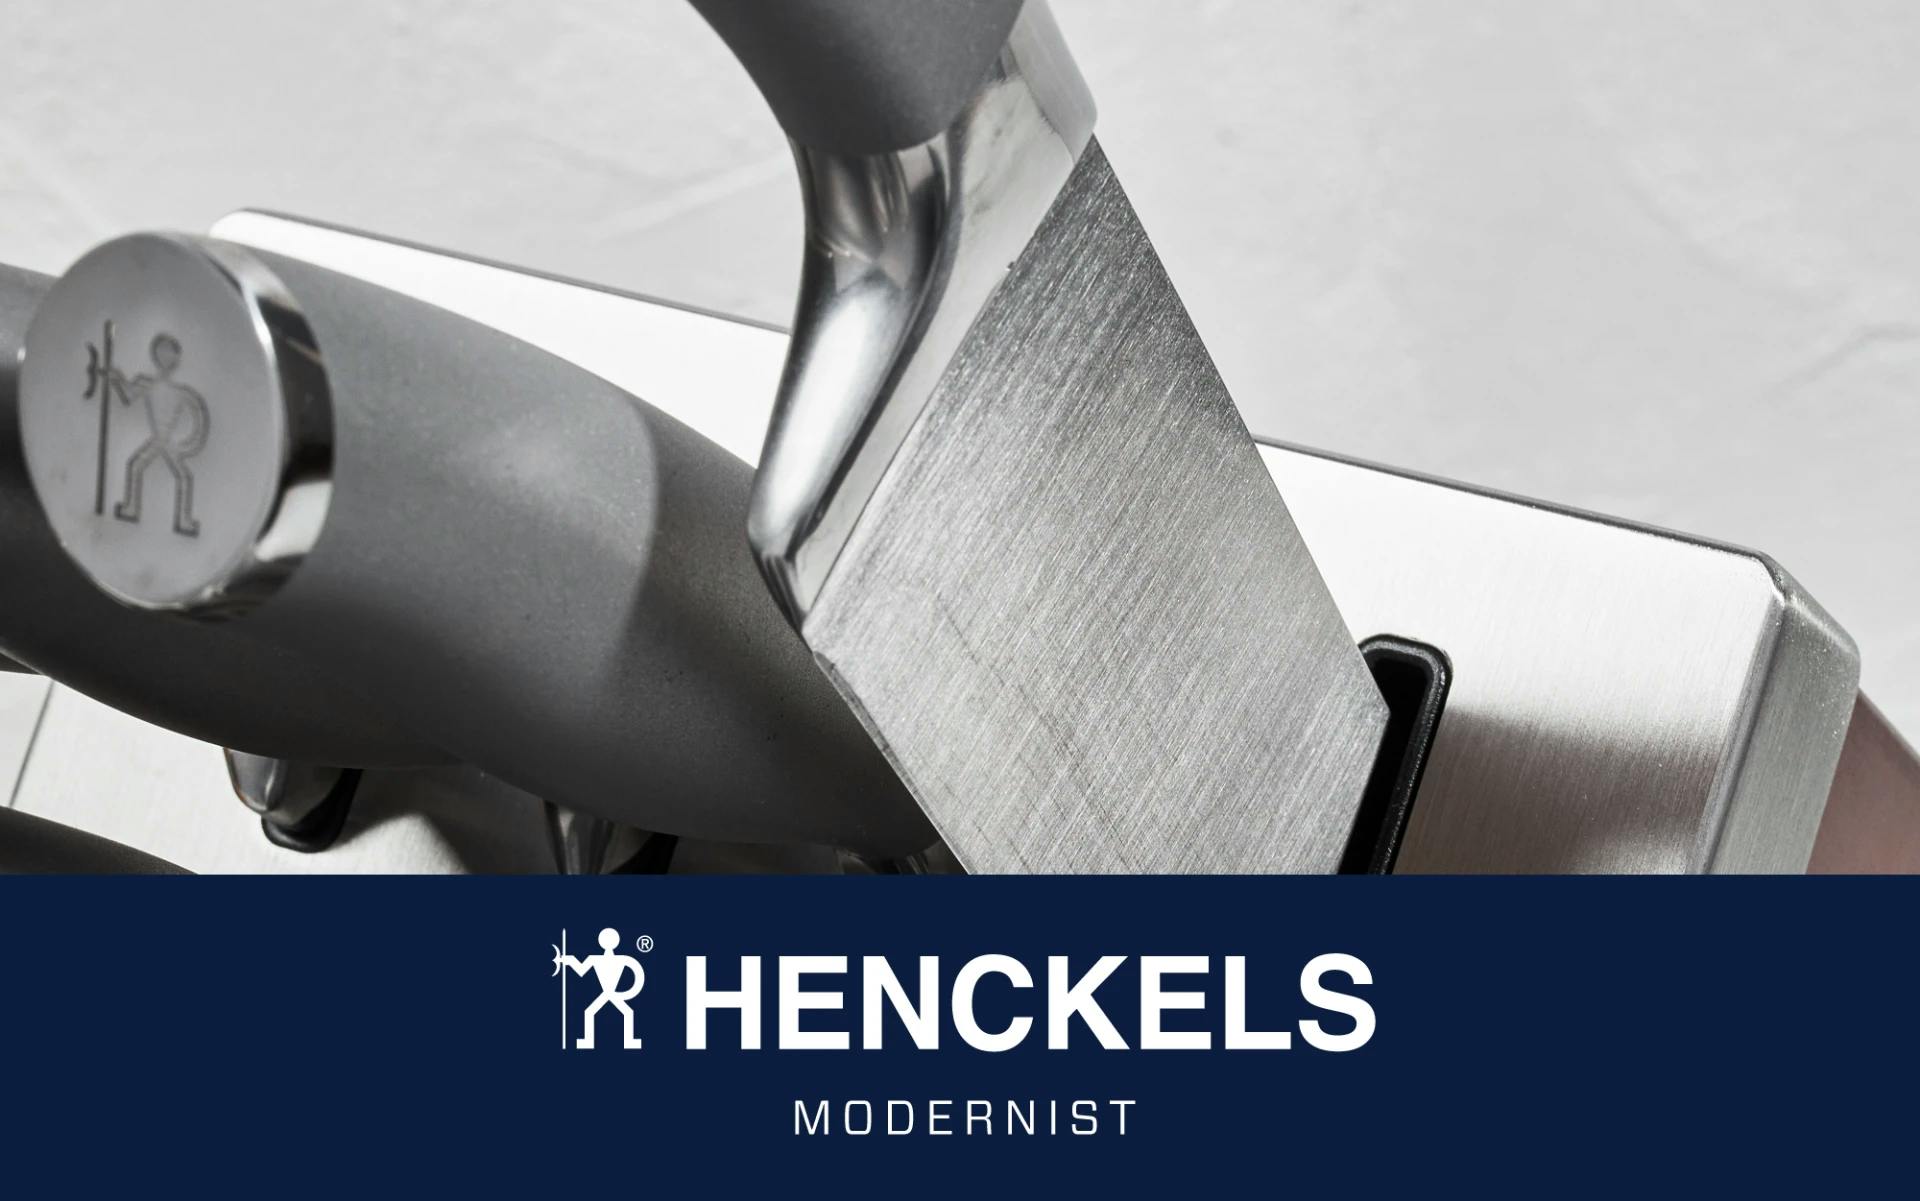 Henckels Modernist 7-pc Self-Sharpening Block Set